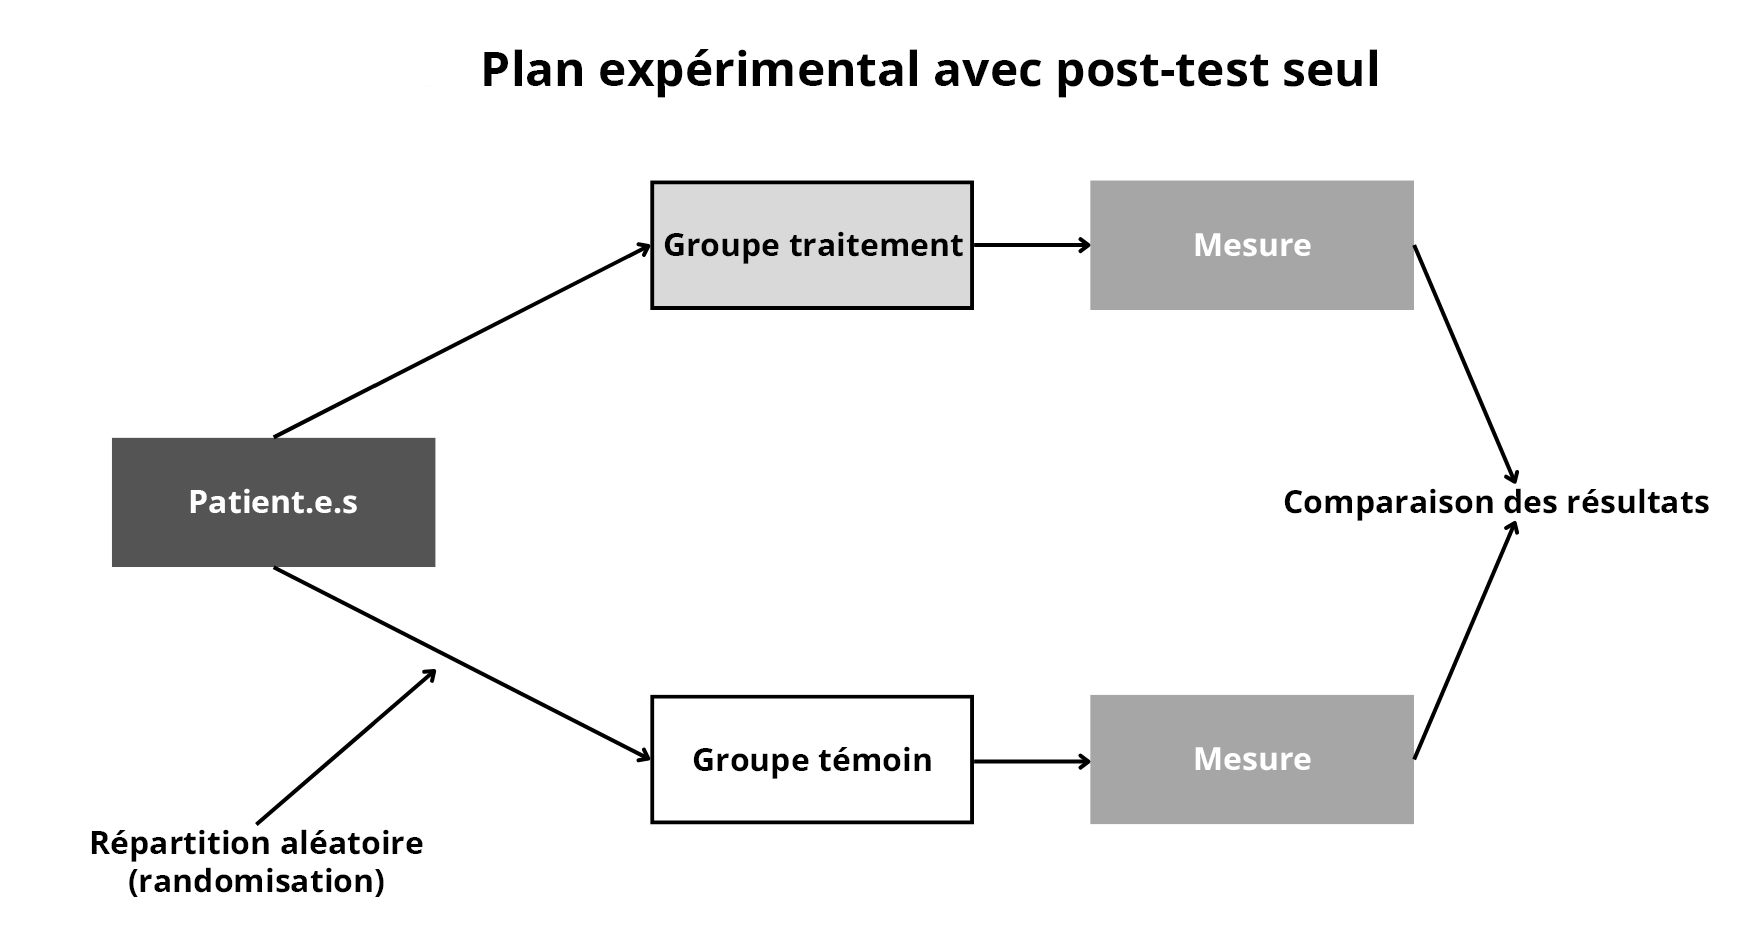 Figure 4. Plan expérimental avec post-test seul